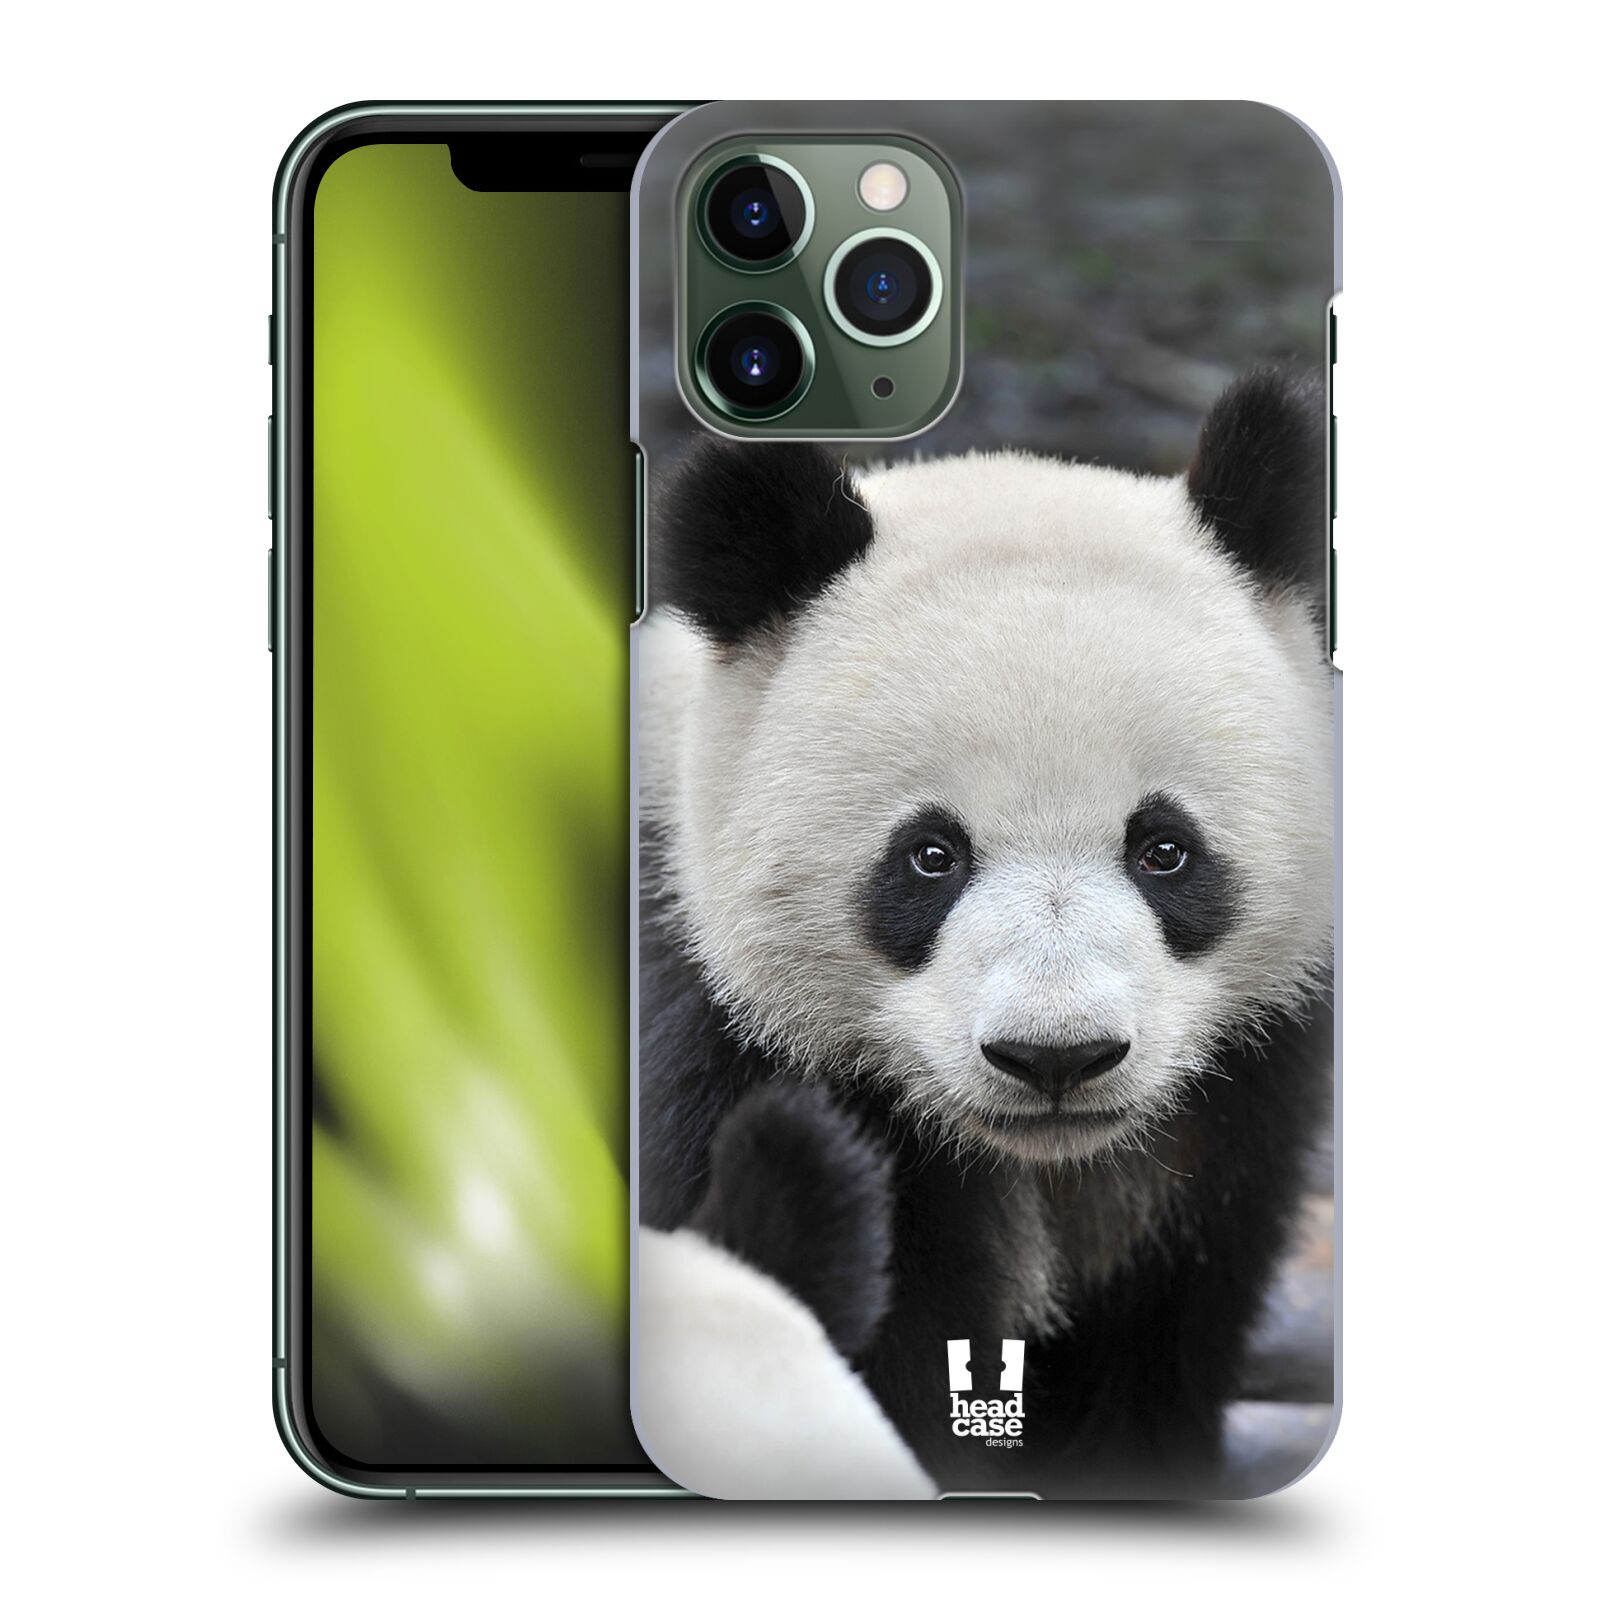 Pouzdro na mobil Apple Iphone 11 PRO - HEAD CASE - vzor Divočina, Divoký život a zvířata foto MEDVĚD PANDA